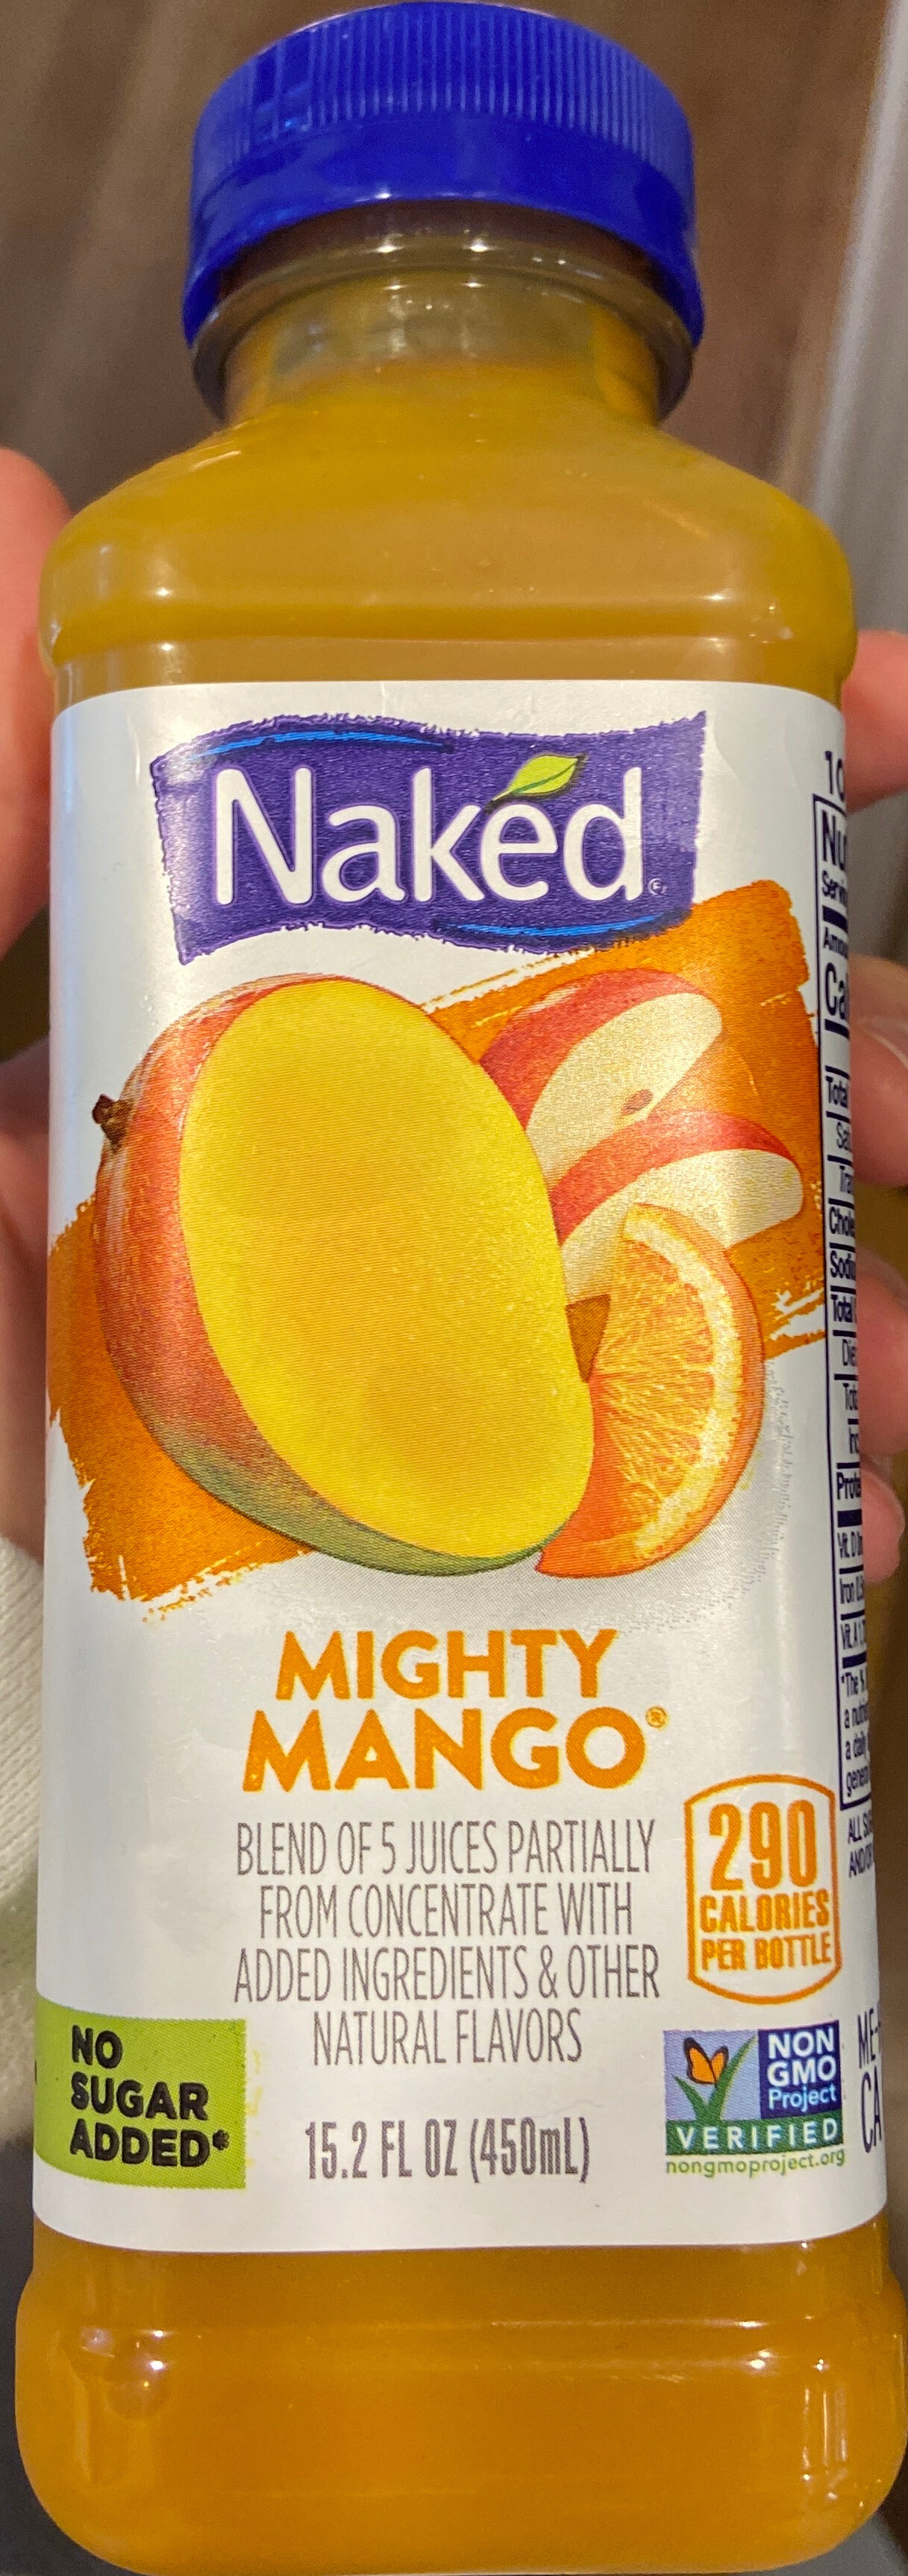 Mighty Mango - Product